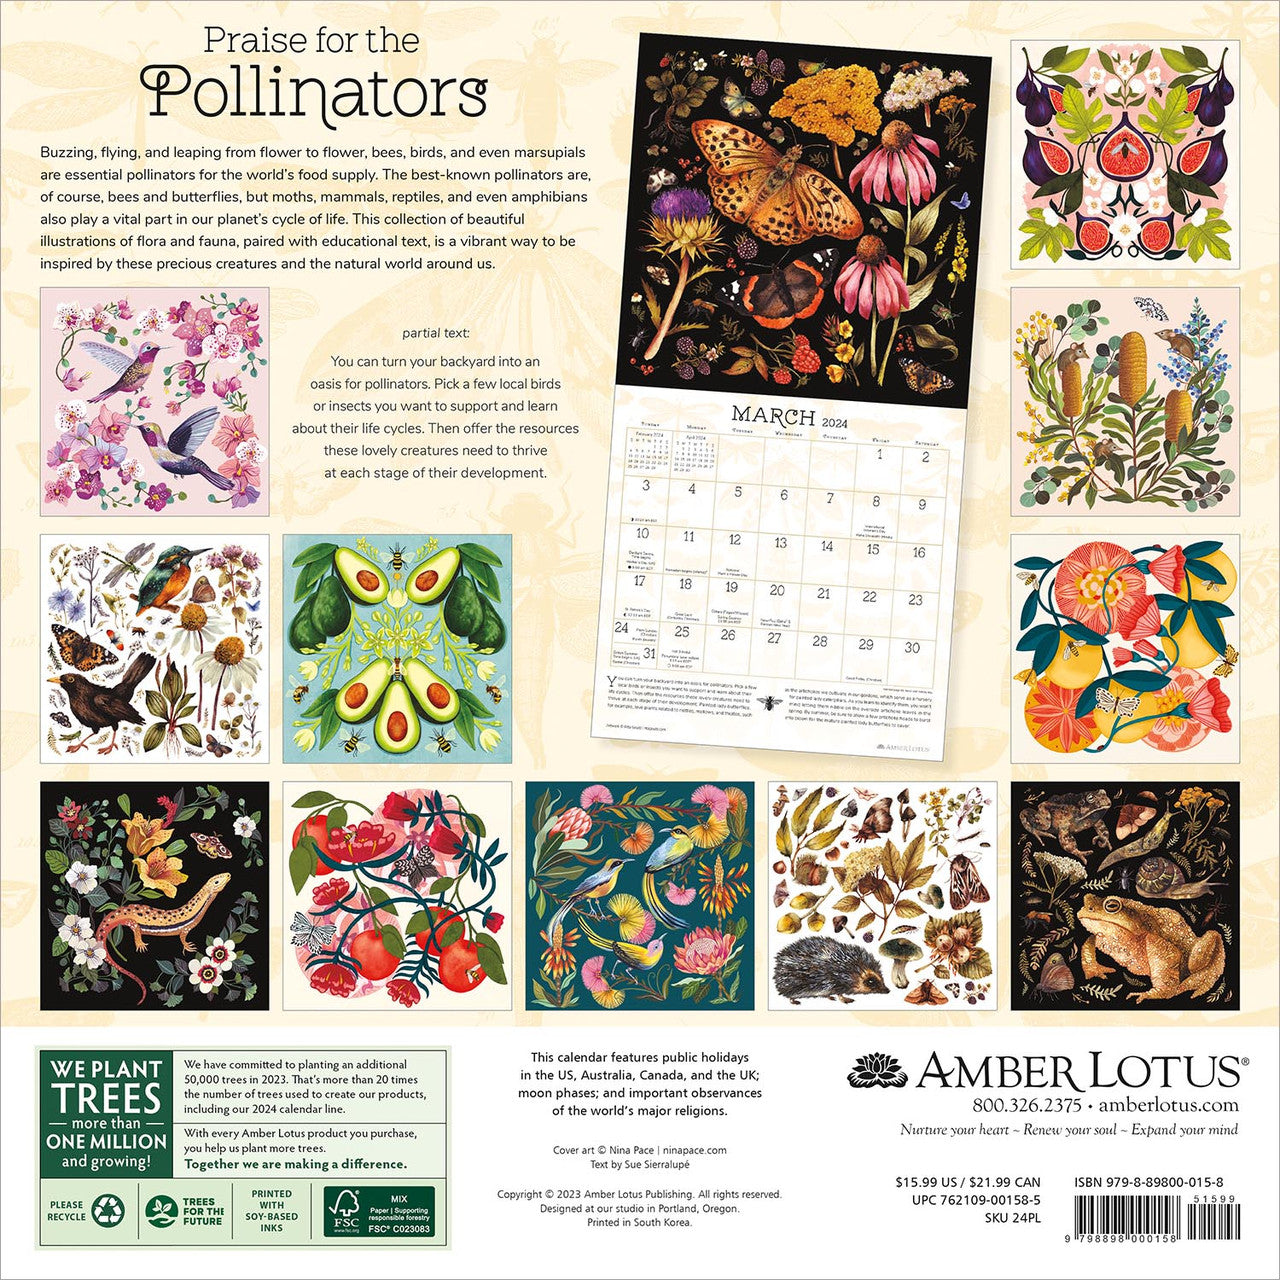 Praise For The Pollinators 2024 Wall Calendar    